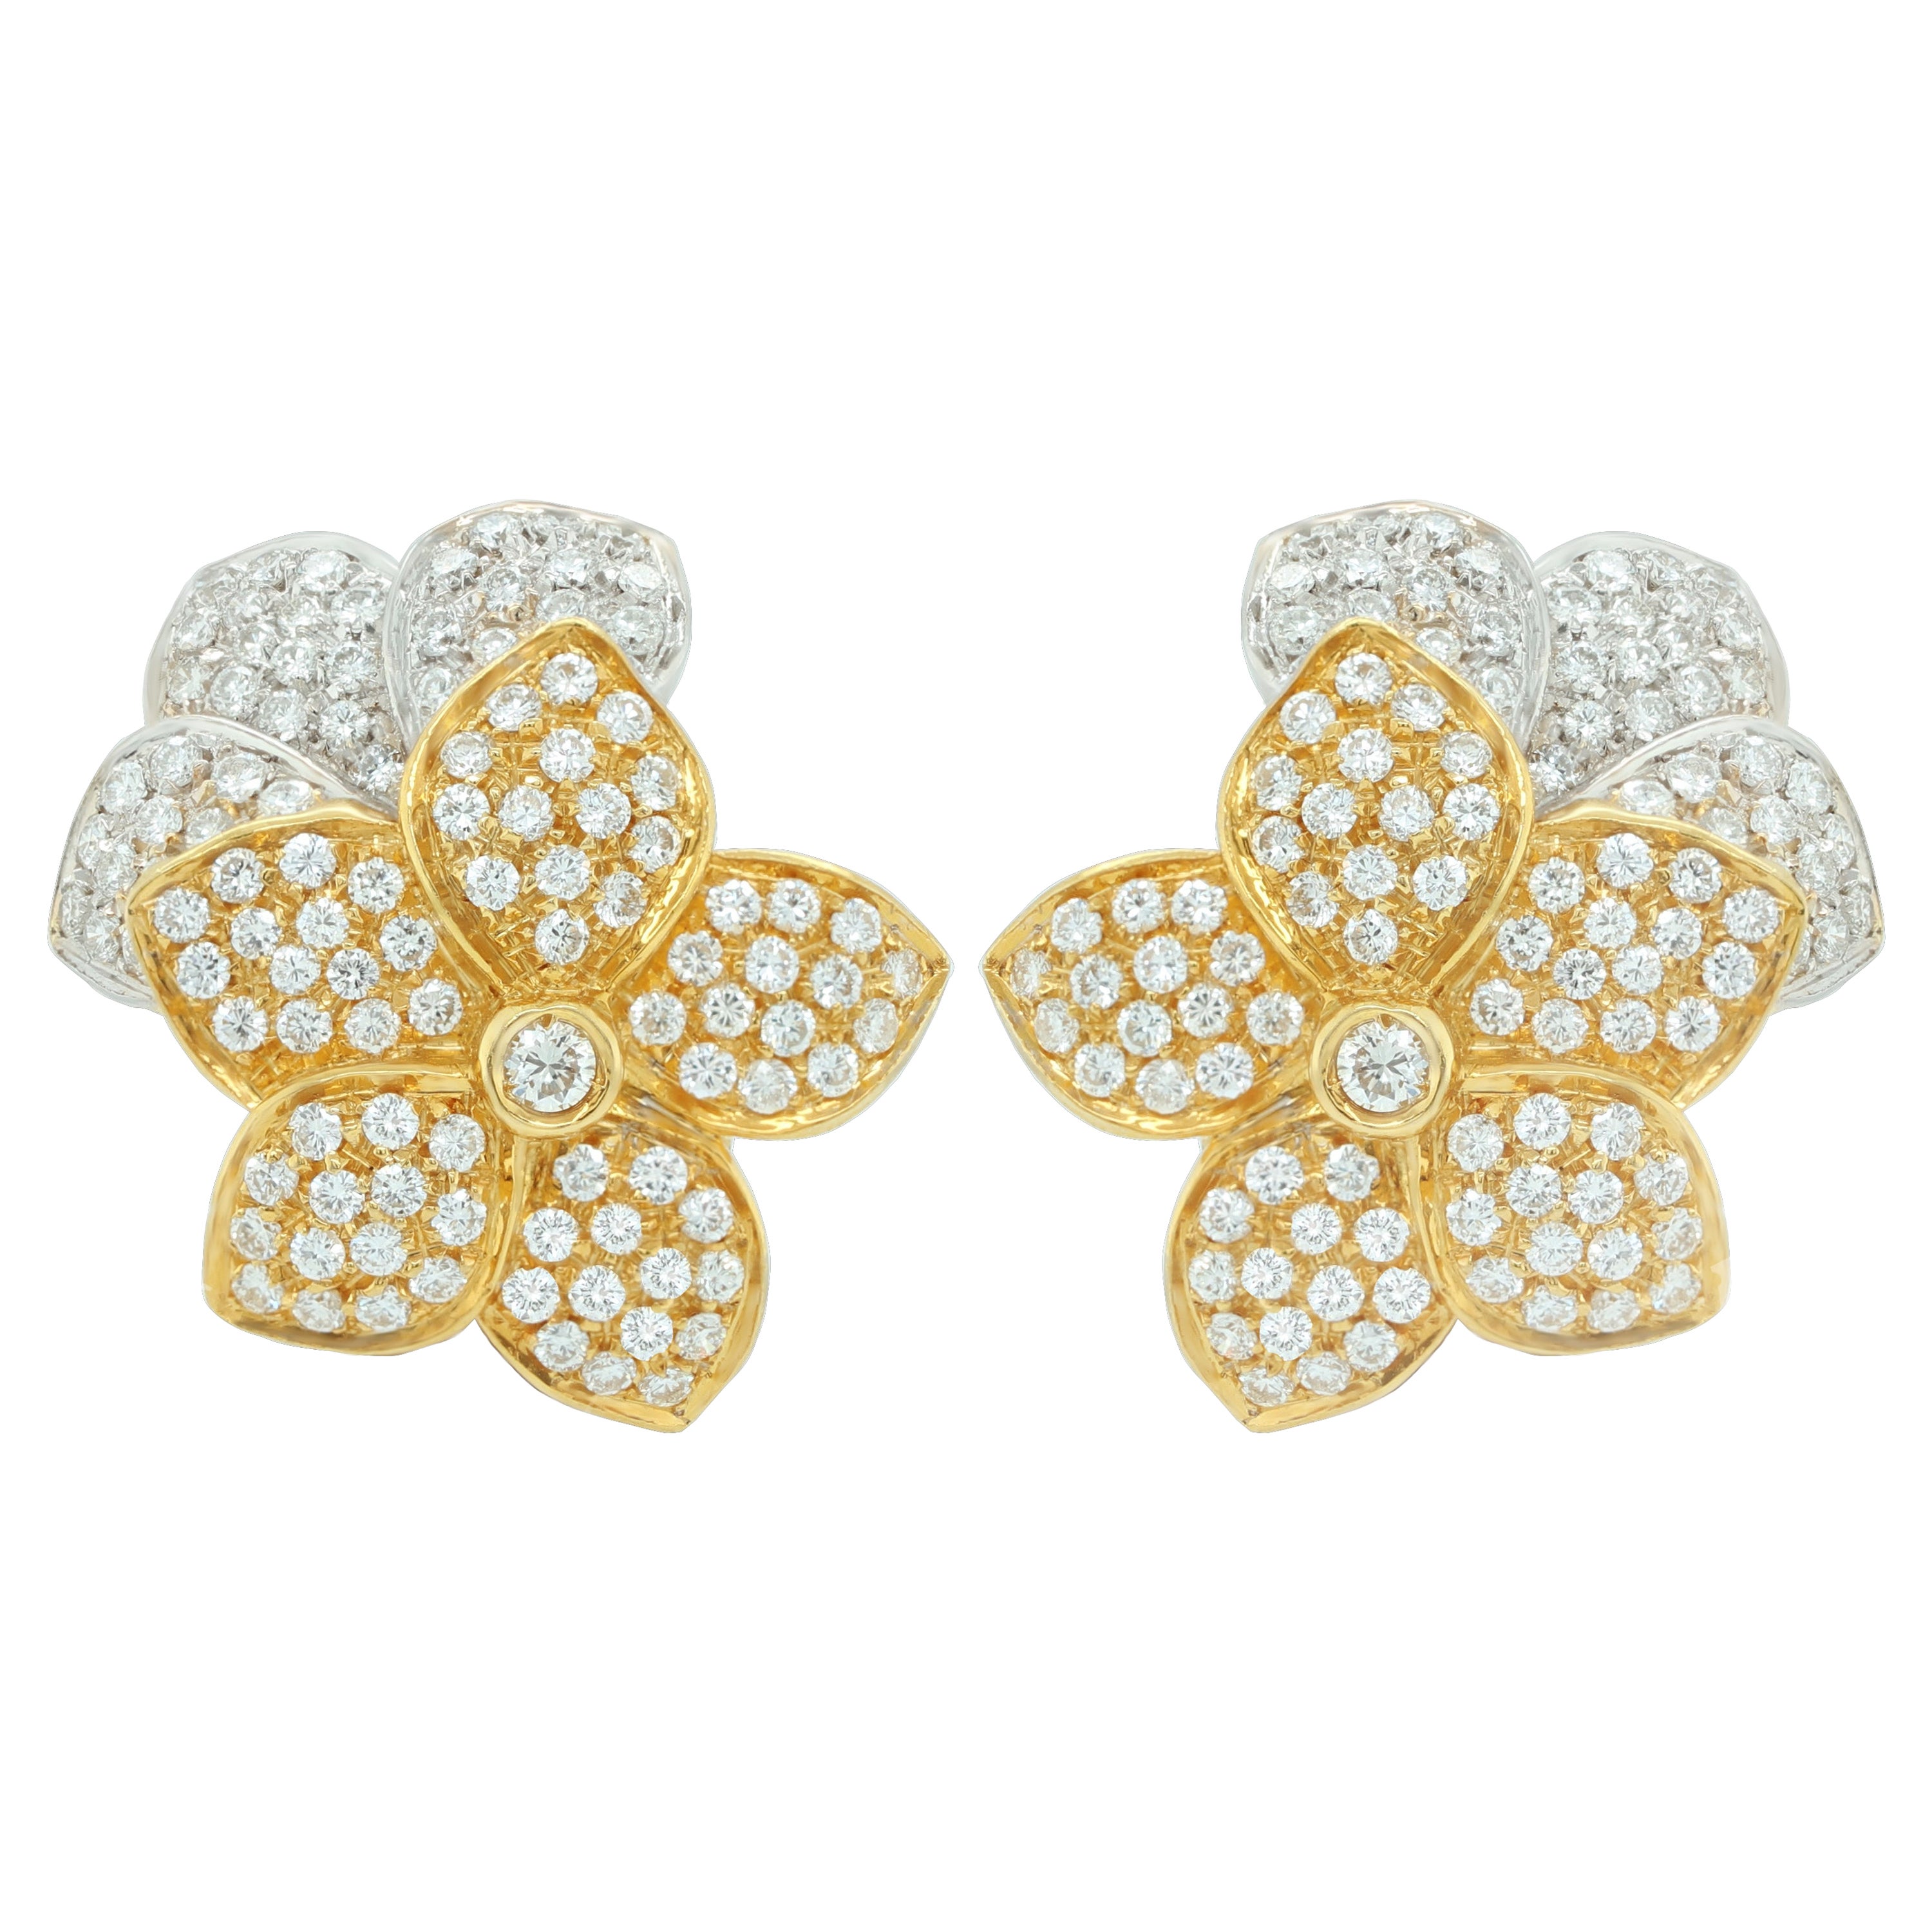 14K White and Yellow Gold Diamond Earrings